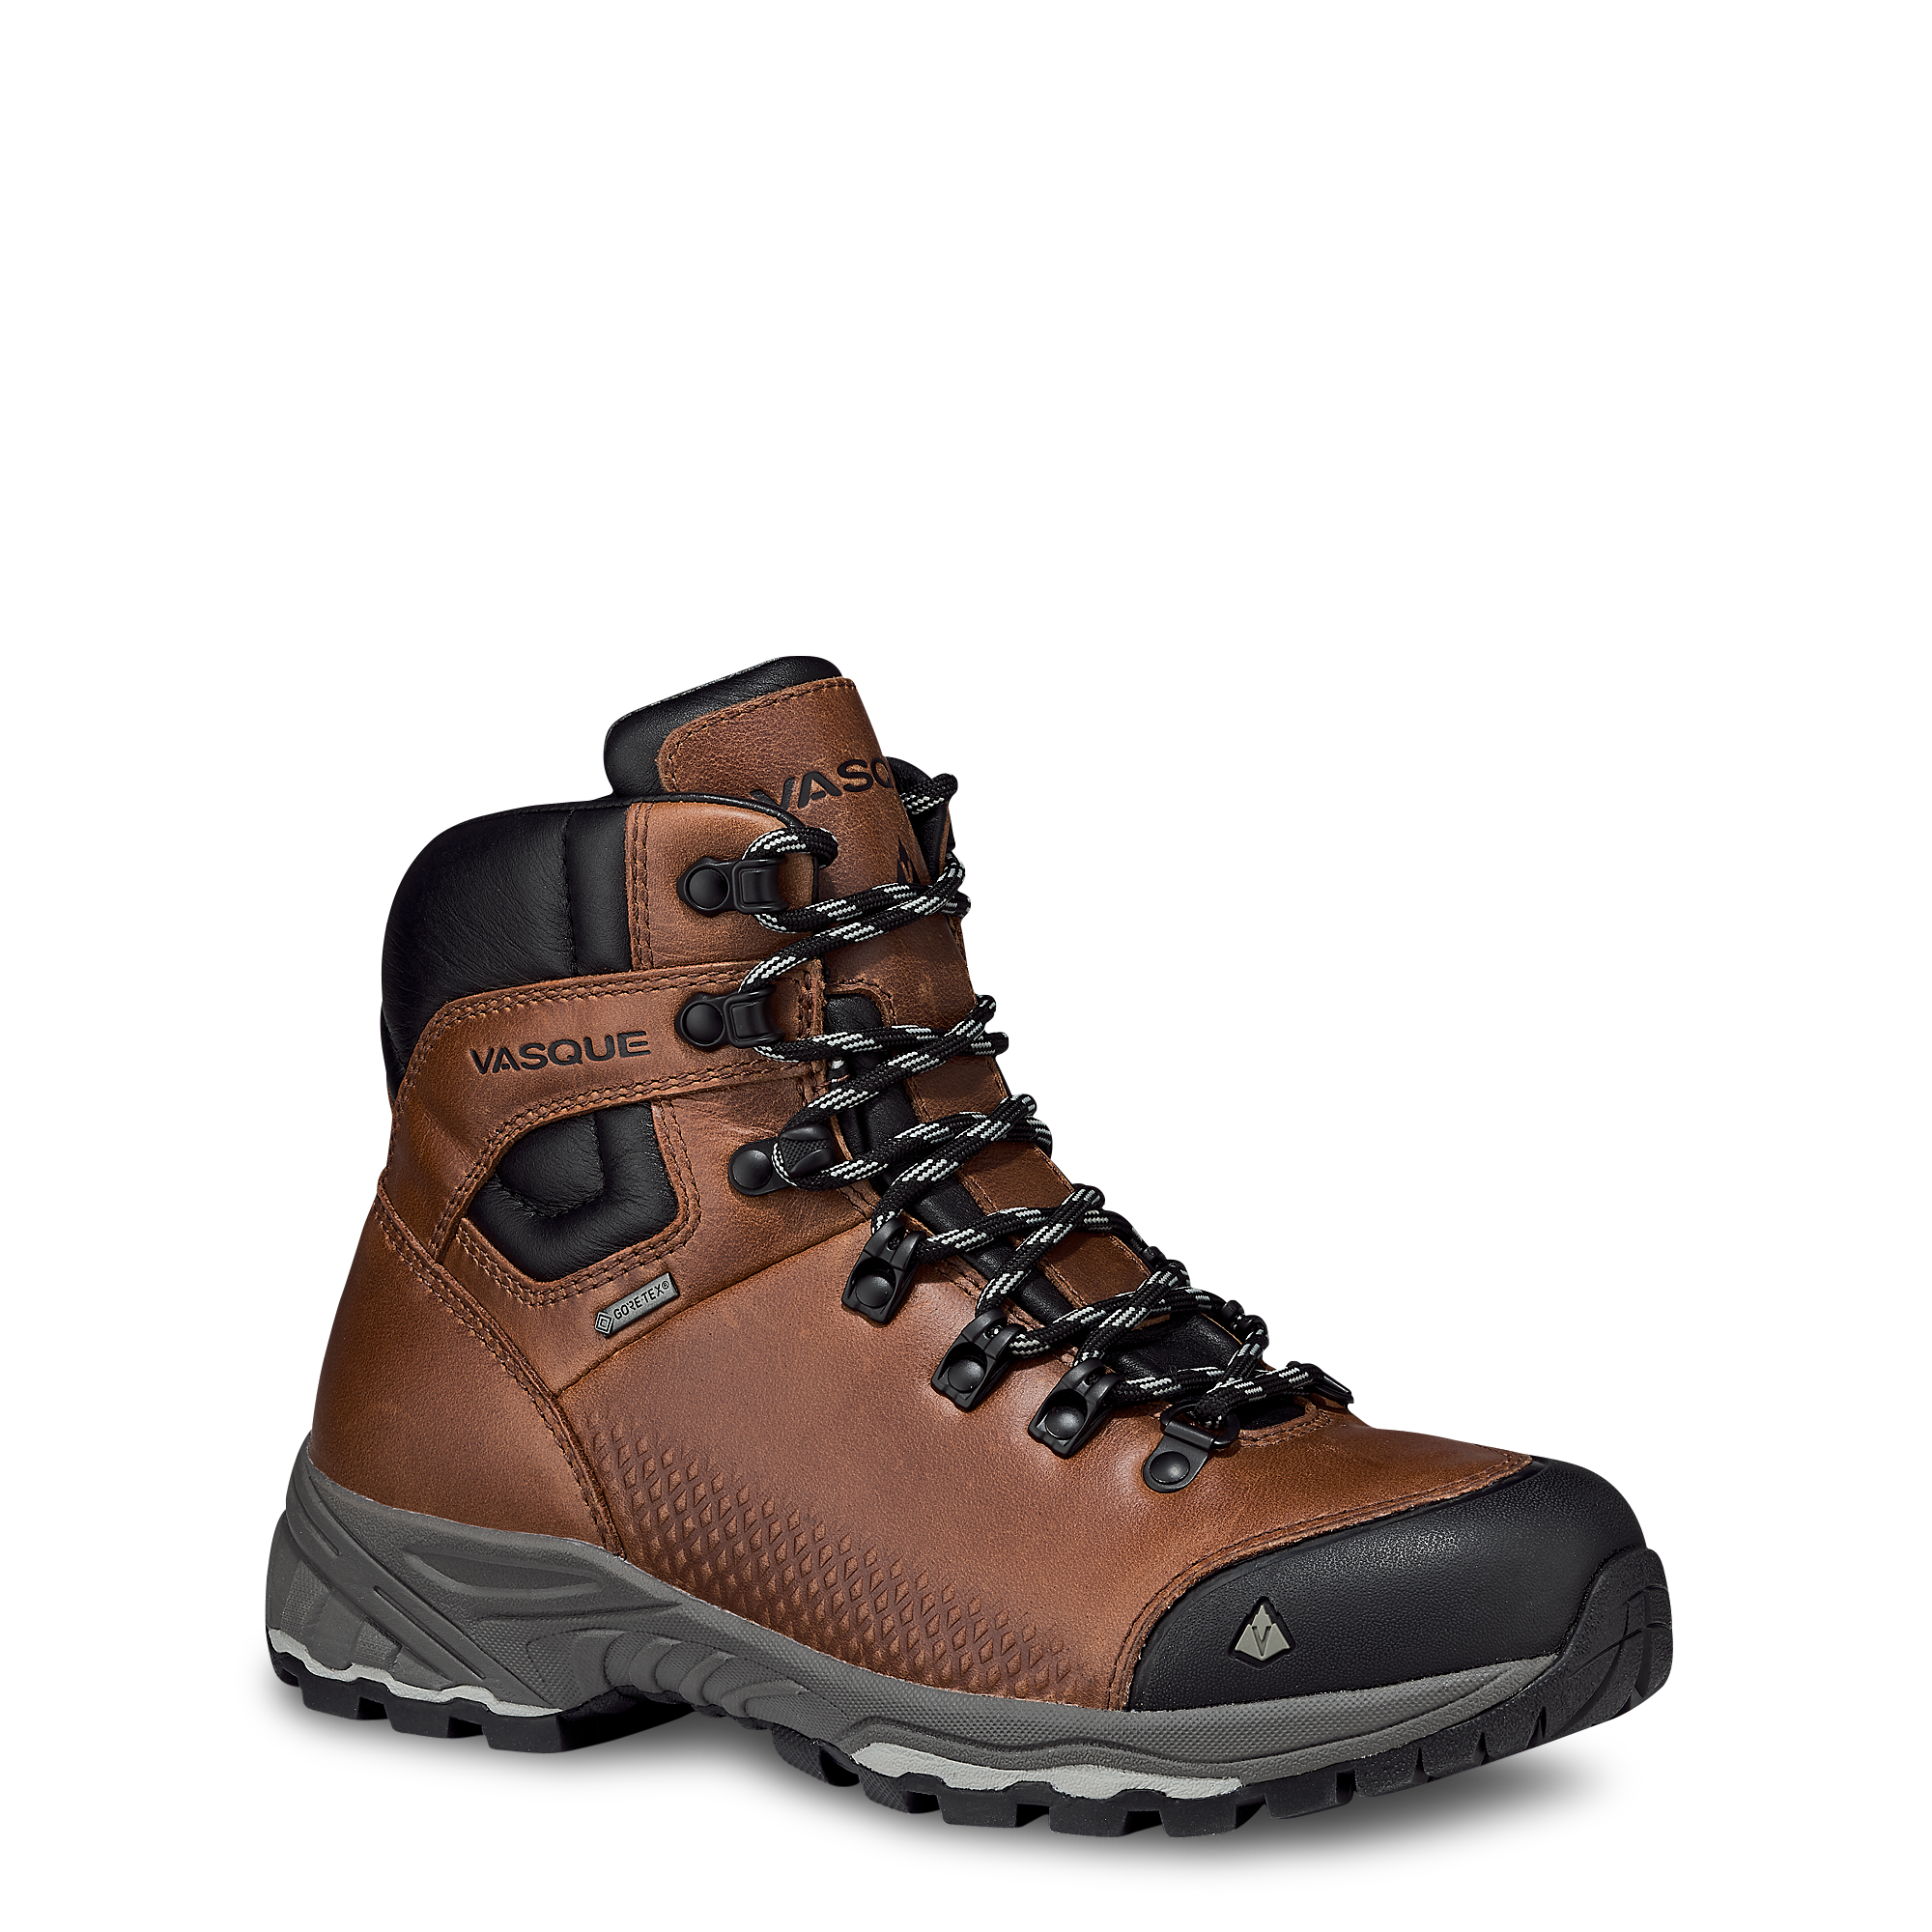 Vasque St. Elias FG GTX Waterproof Hiking Boots for Ladies - Cognac - 9.5M